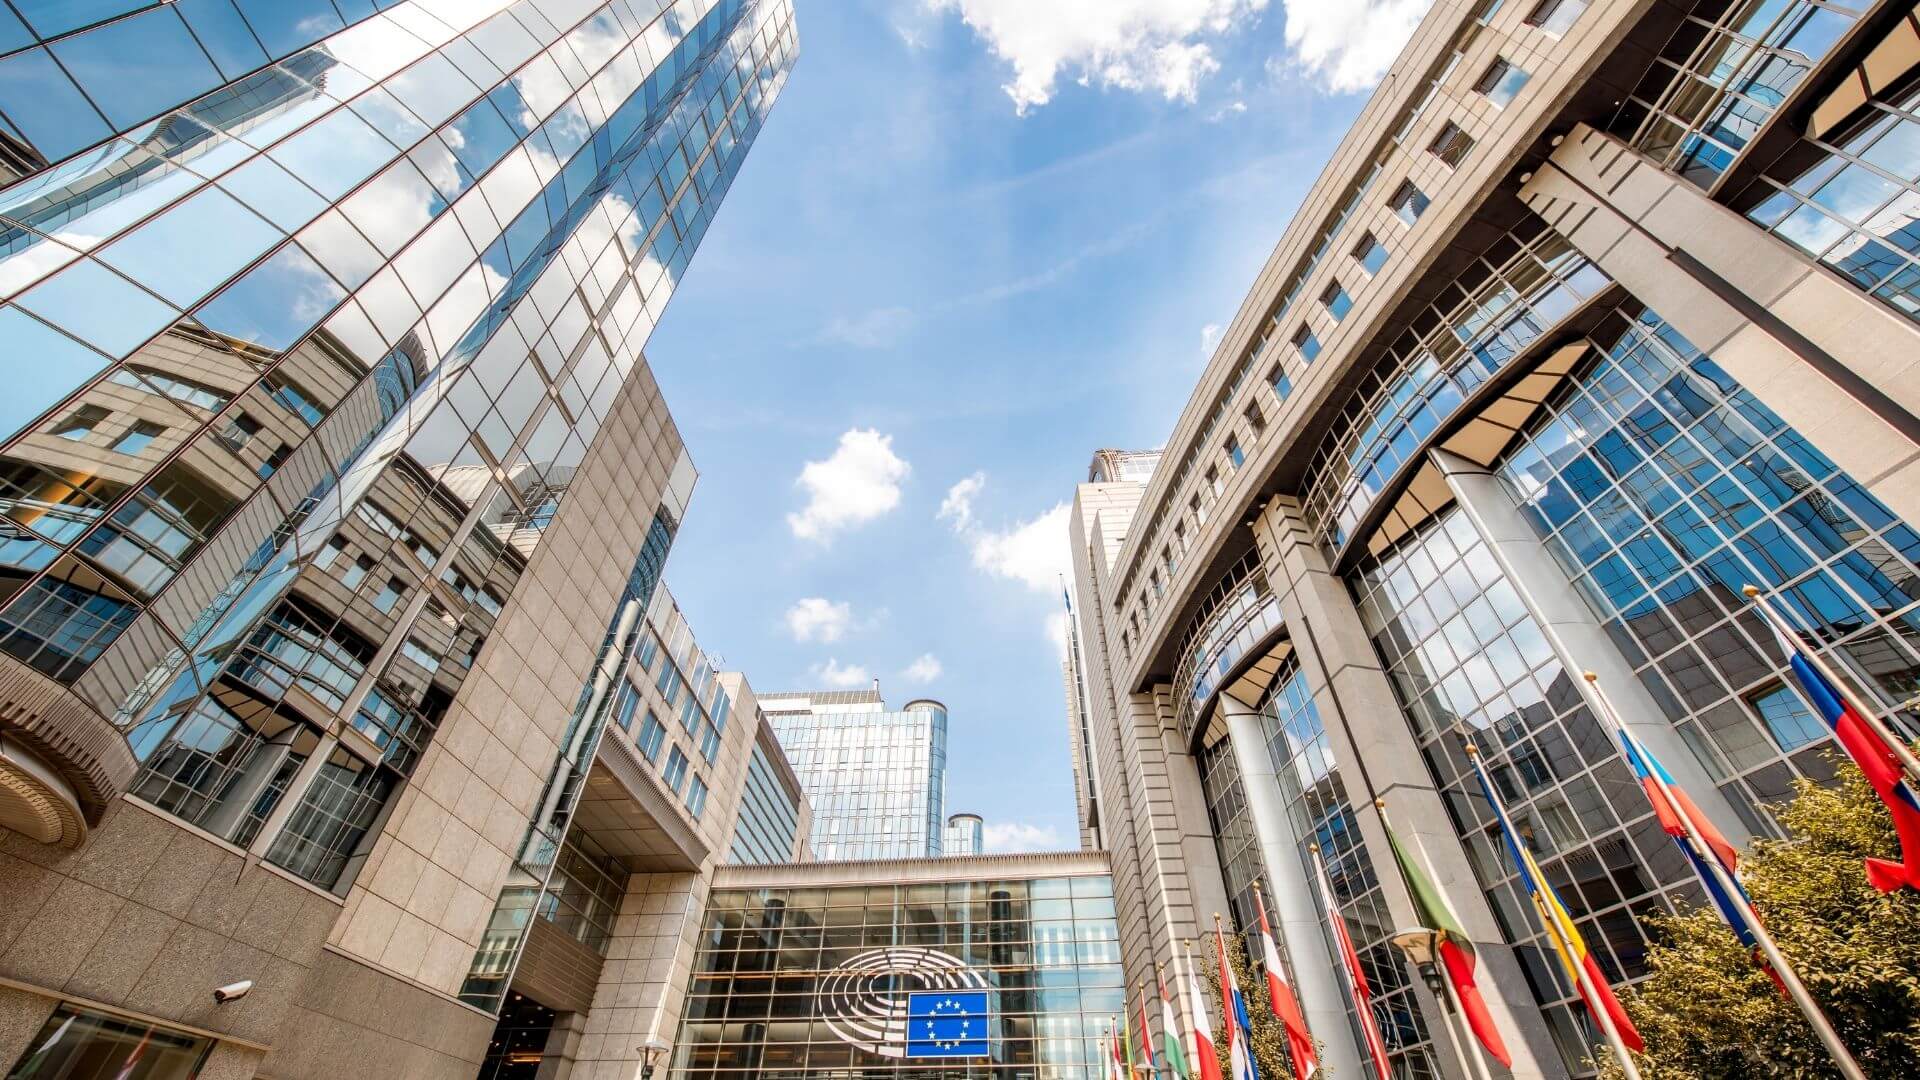 European Parliament recommends mandatory e-invoicing to harmonize VAT requirements across the EU